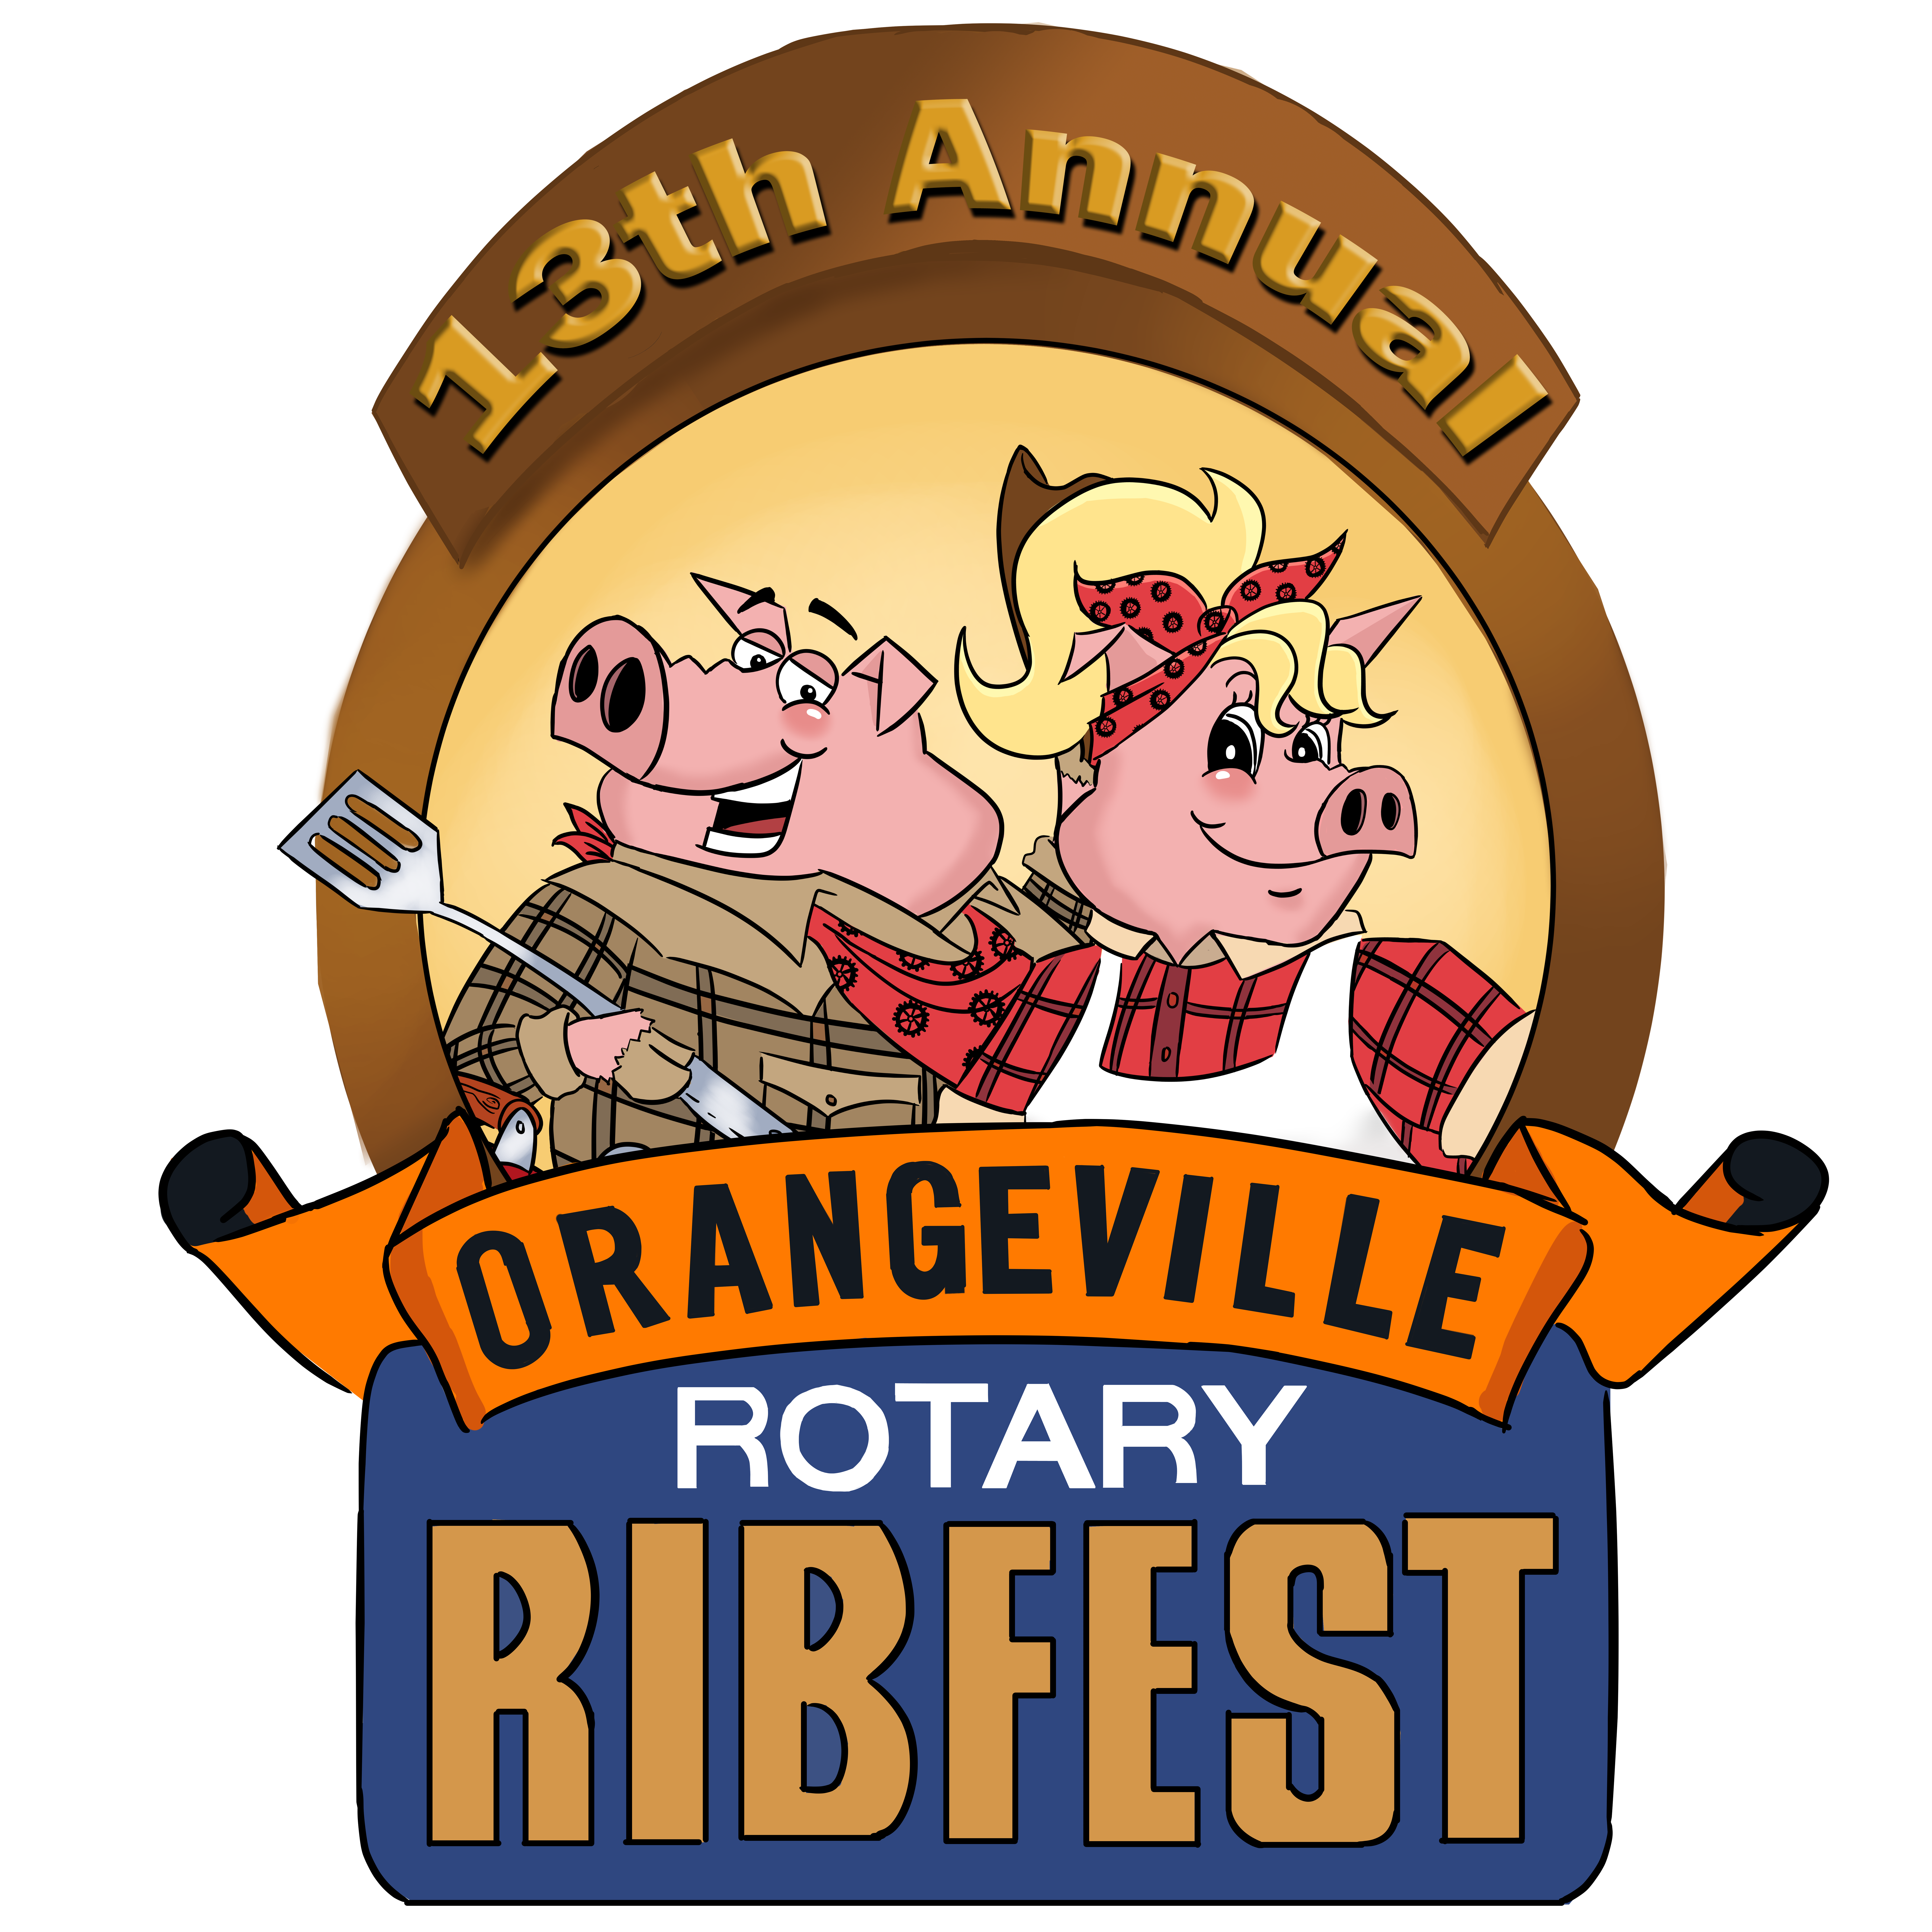 13th Annual Ribfest logo